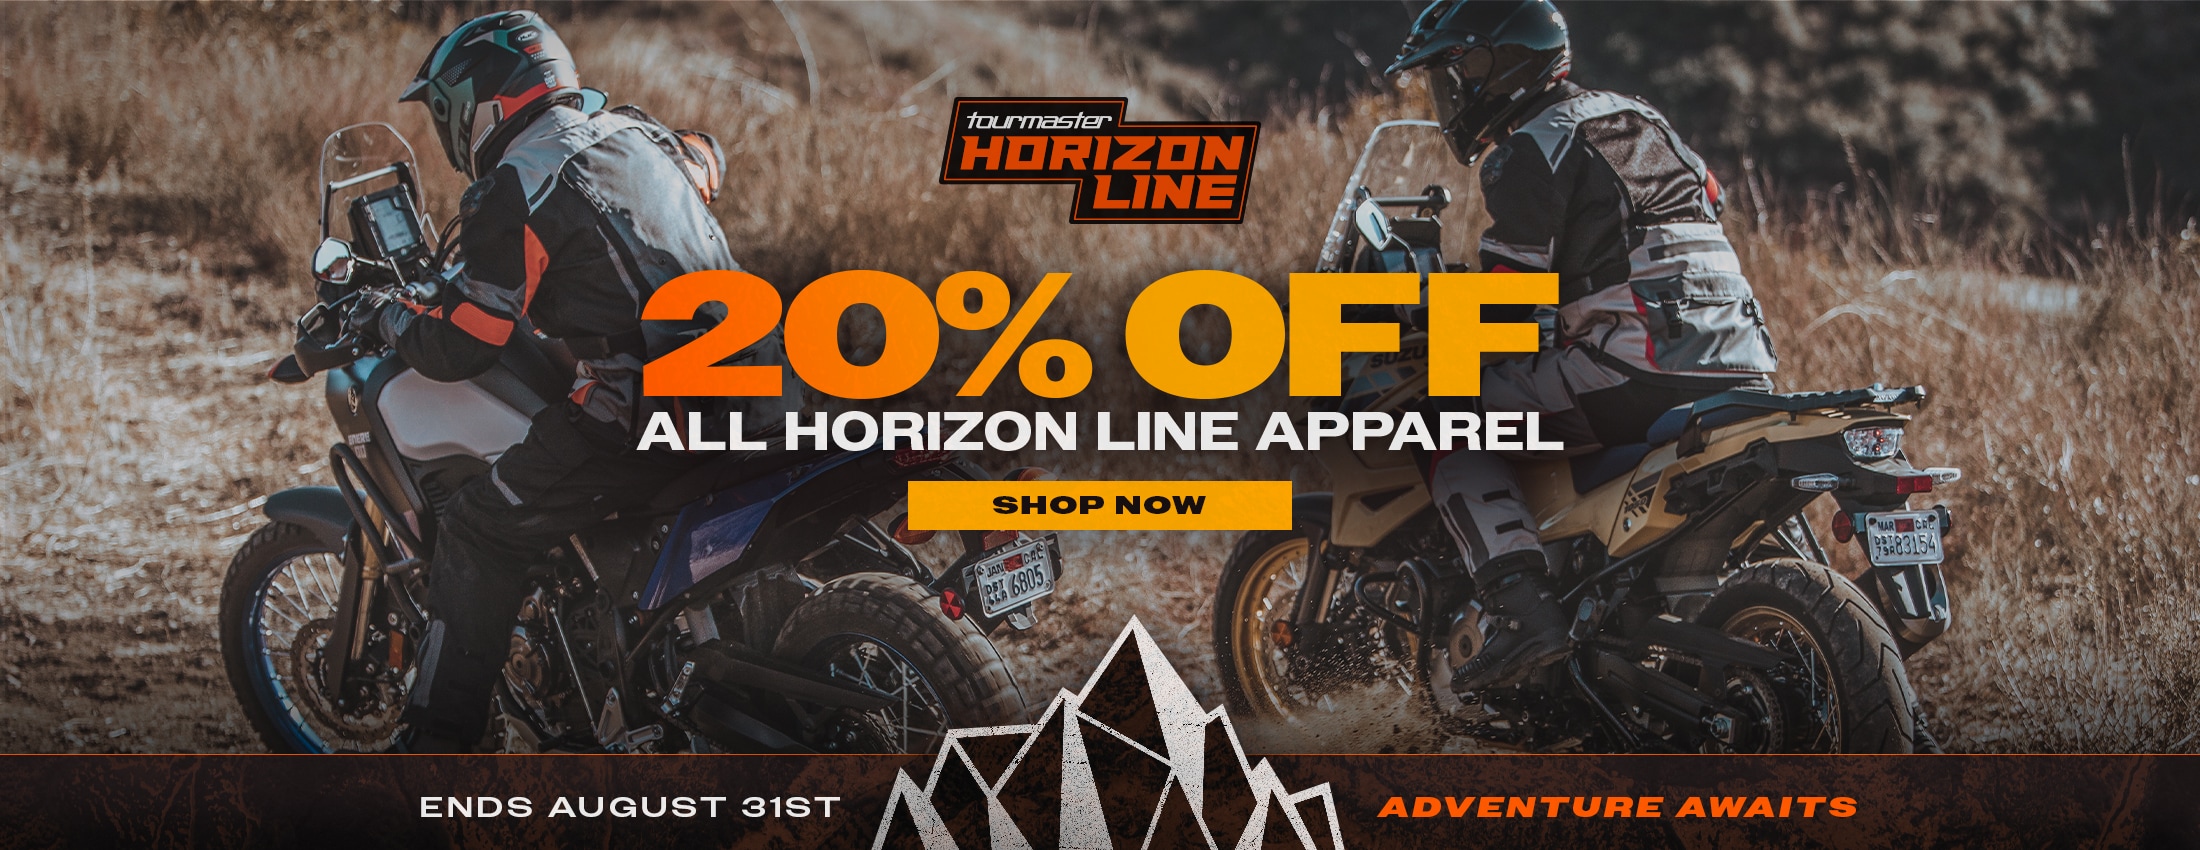 All Horizon Line Apparel 20% Off